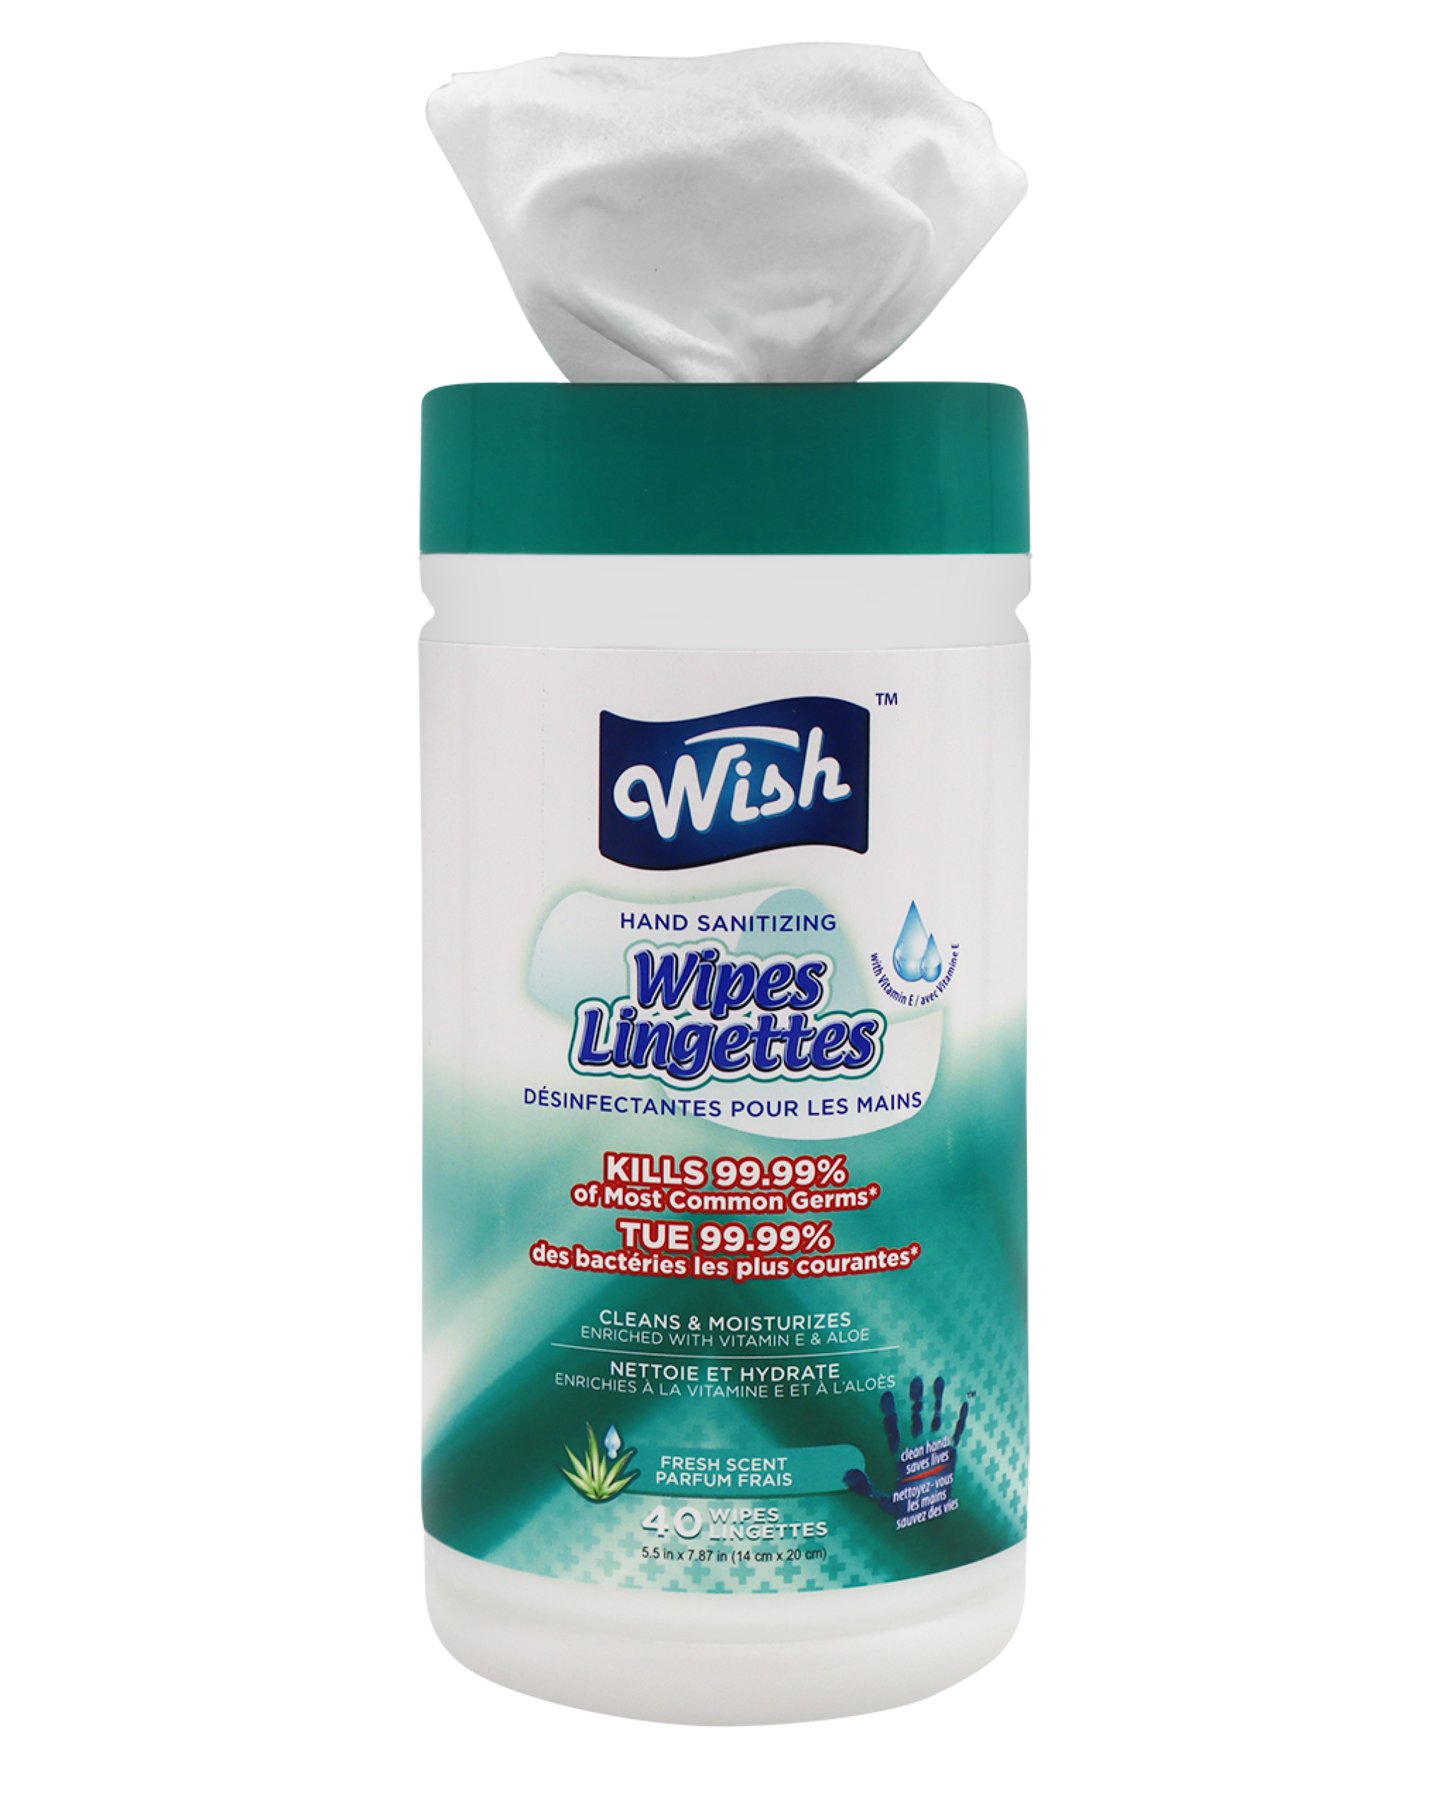 Wish Hand Sanitizer Wipes Lingettes (Cylinder Size) (40 ct) - Fresh